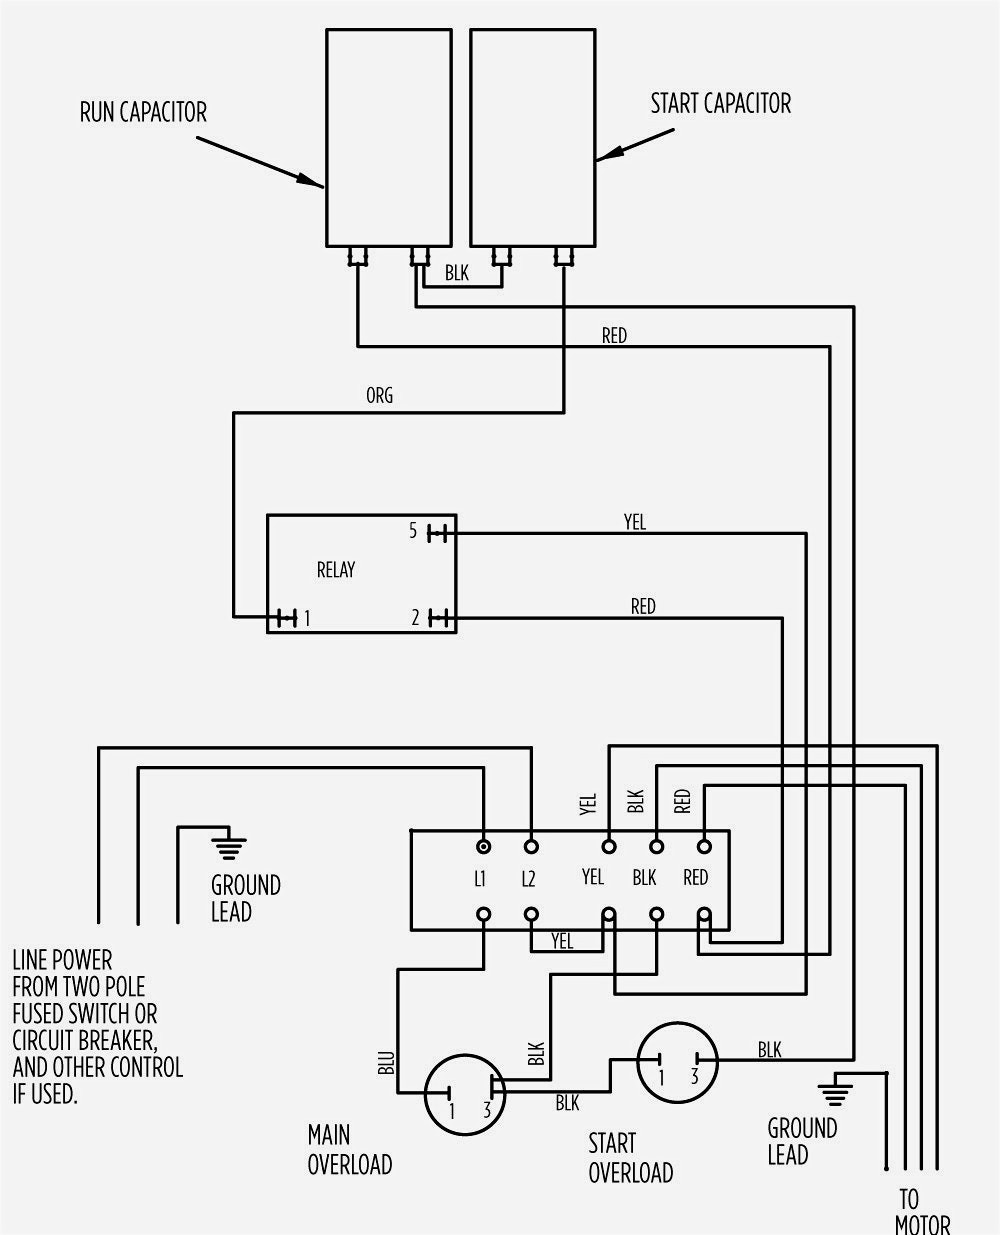 Basic Connection Single Phase Motor Reverse And Forward